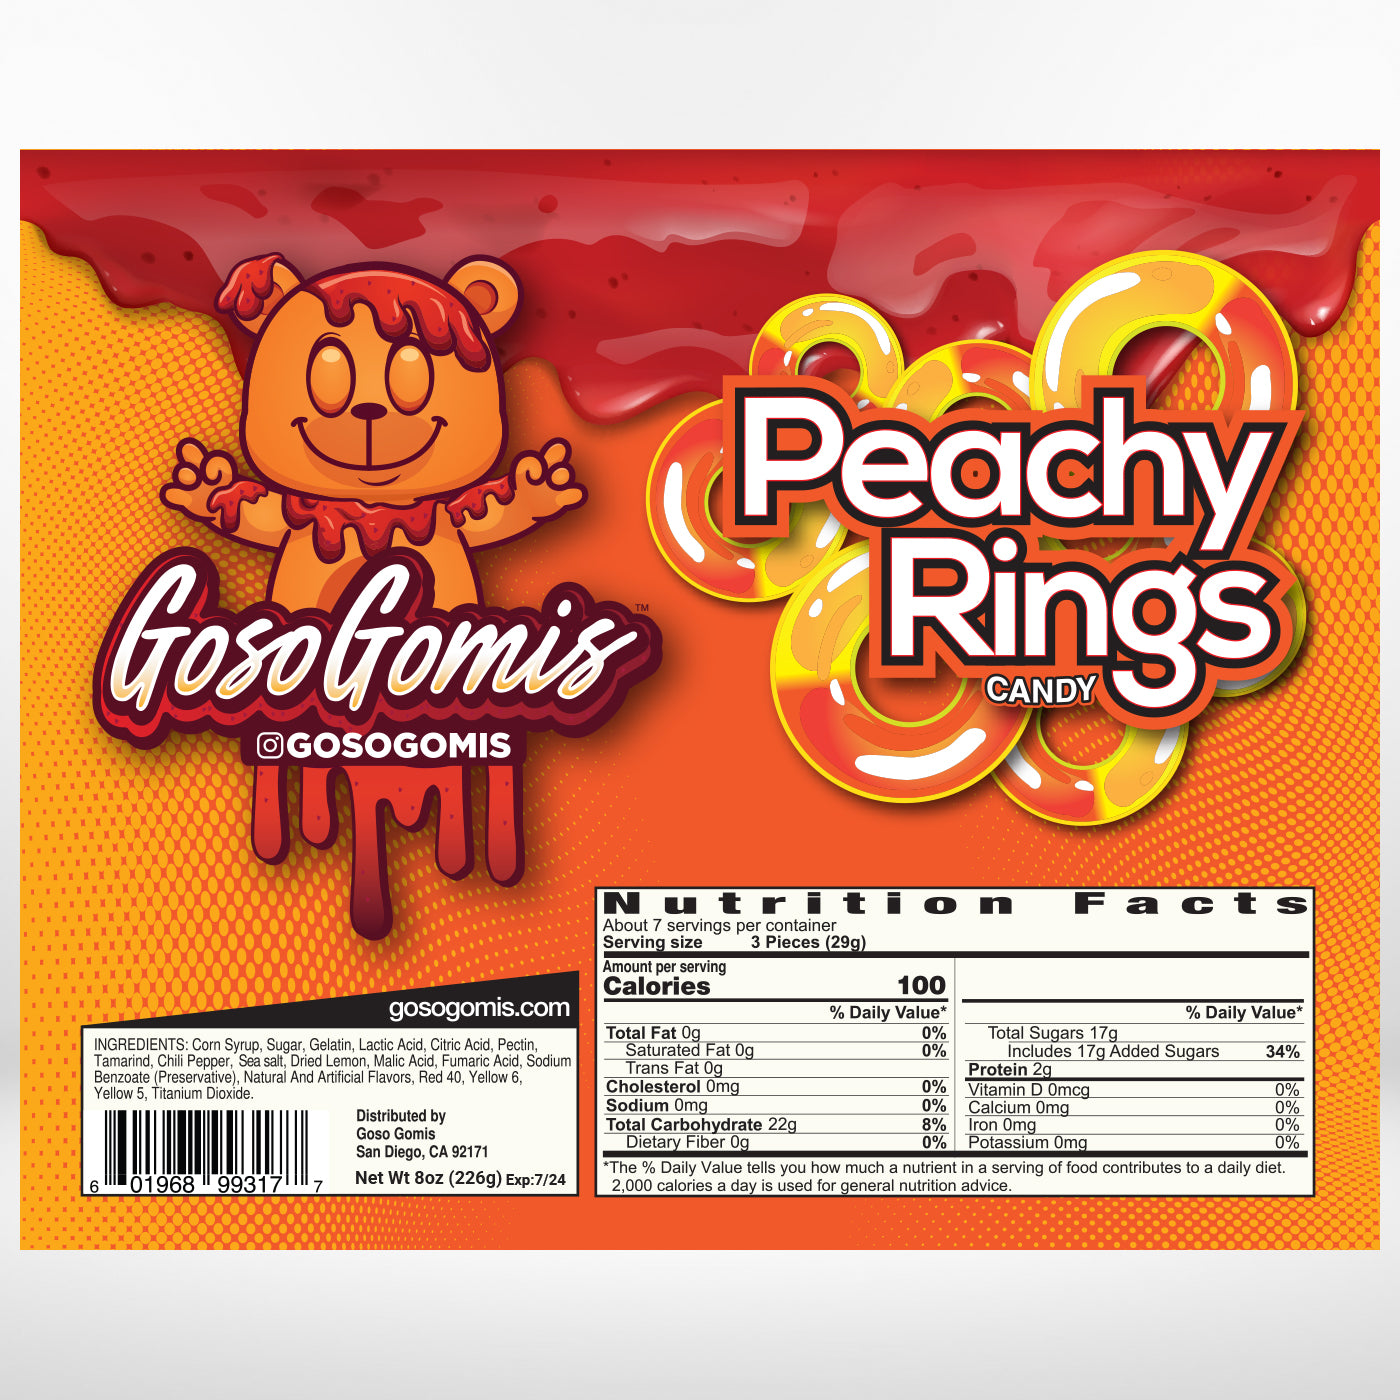 Peach Rings